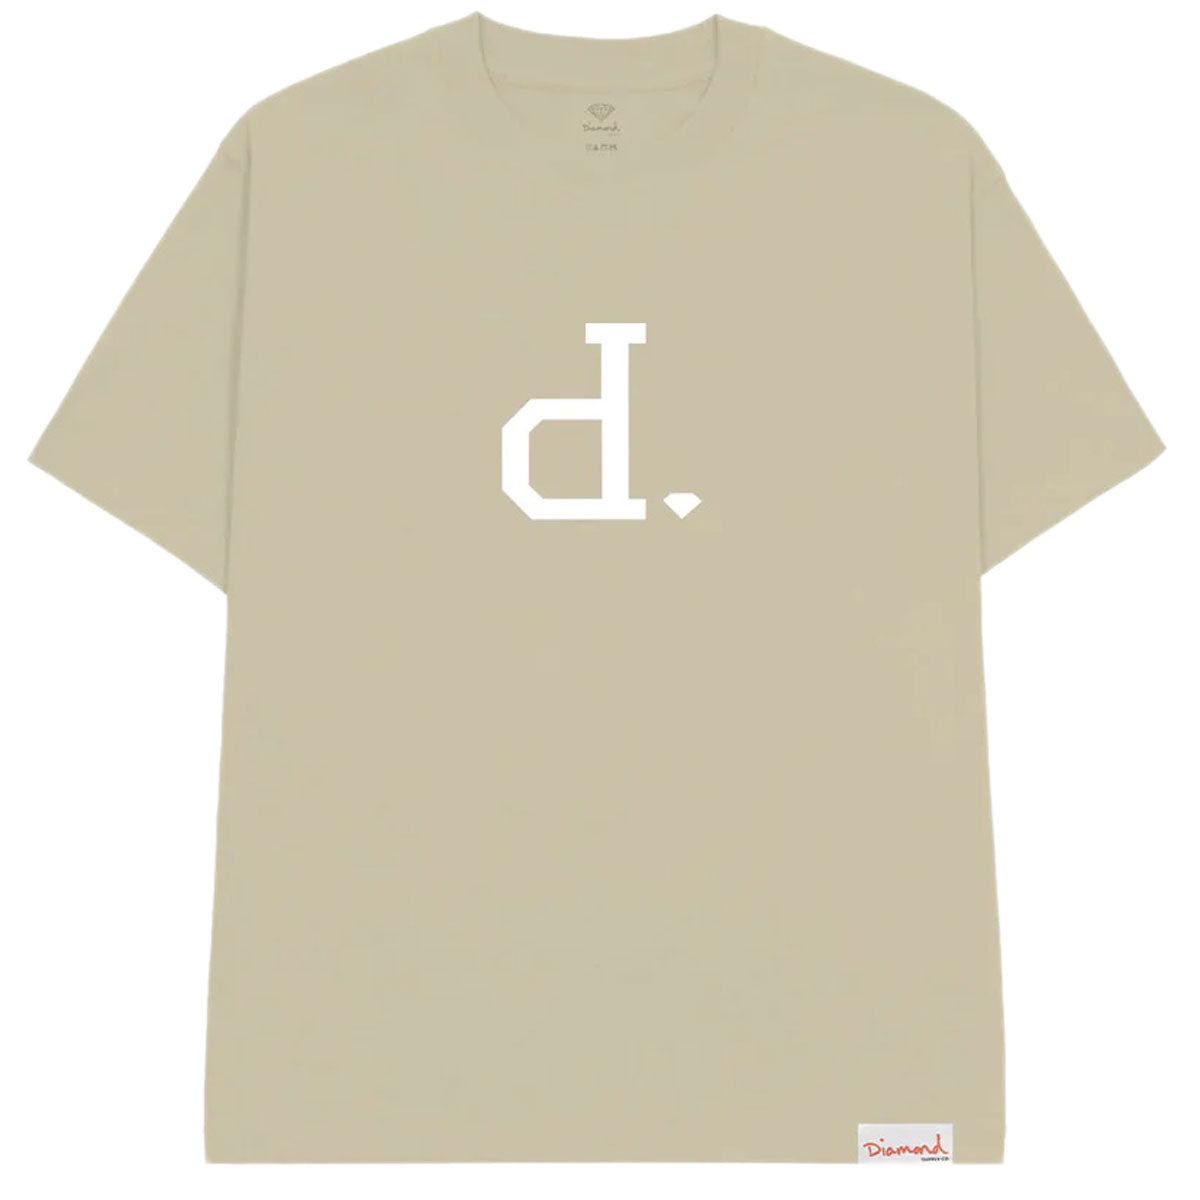 Diamond Supply Co. Unpolo Script T-Shirt - Natural image 1